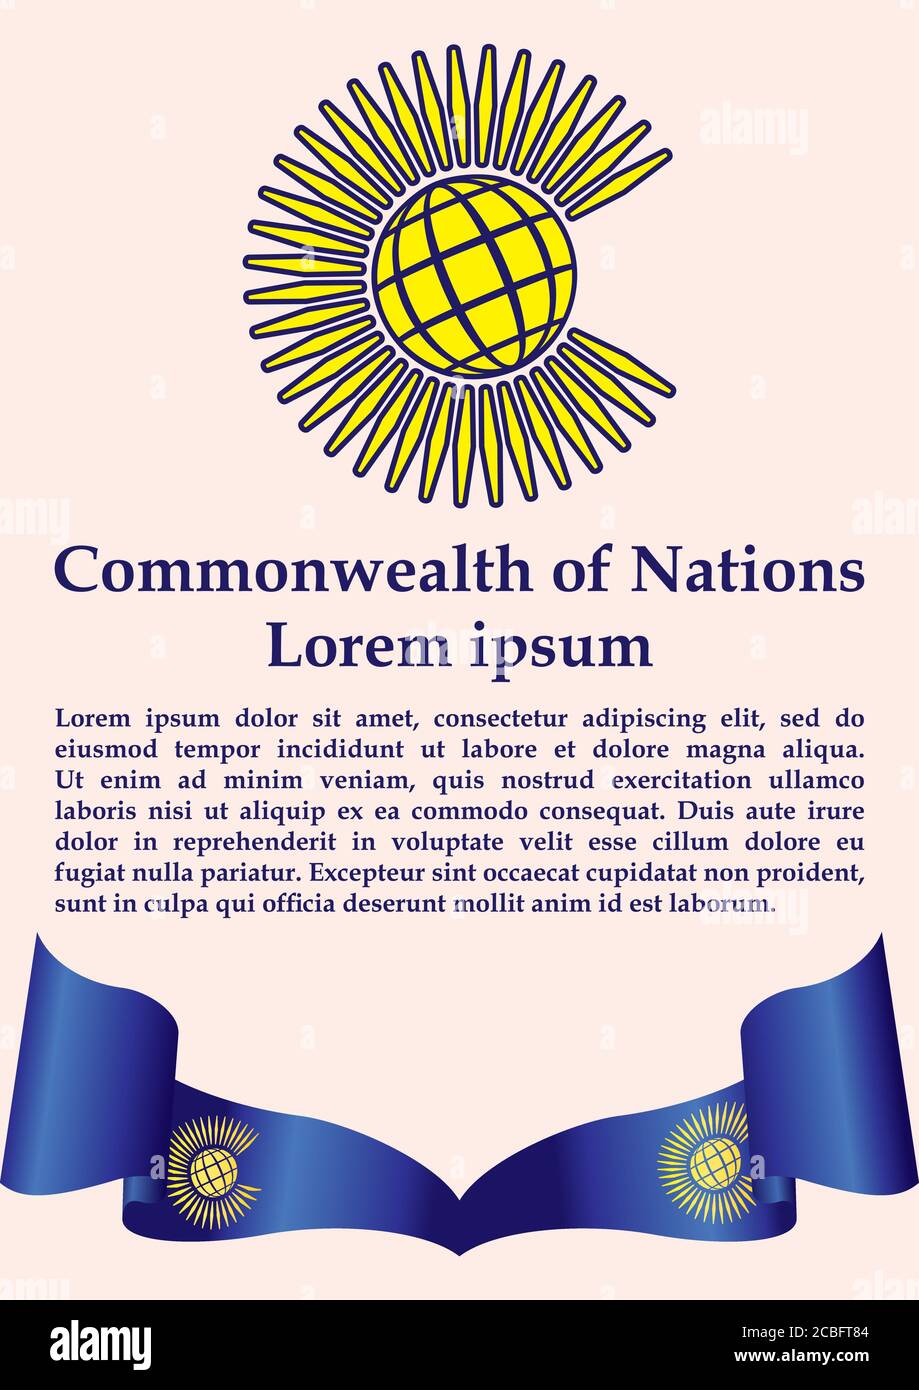 Flagge des Commonwealth of Nations, Commonwealth of Nations, British Commonwealth. Helle, farbenfrohe Vektorgrafik Stock Vektor